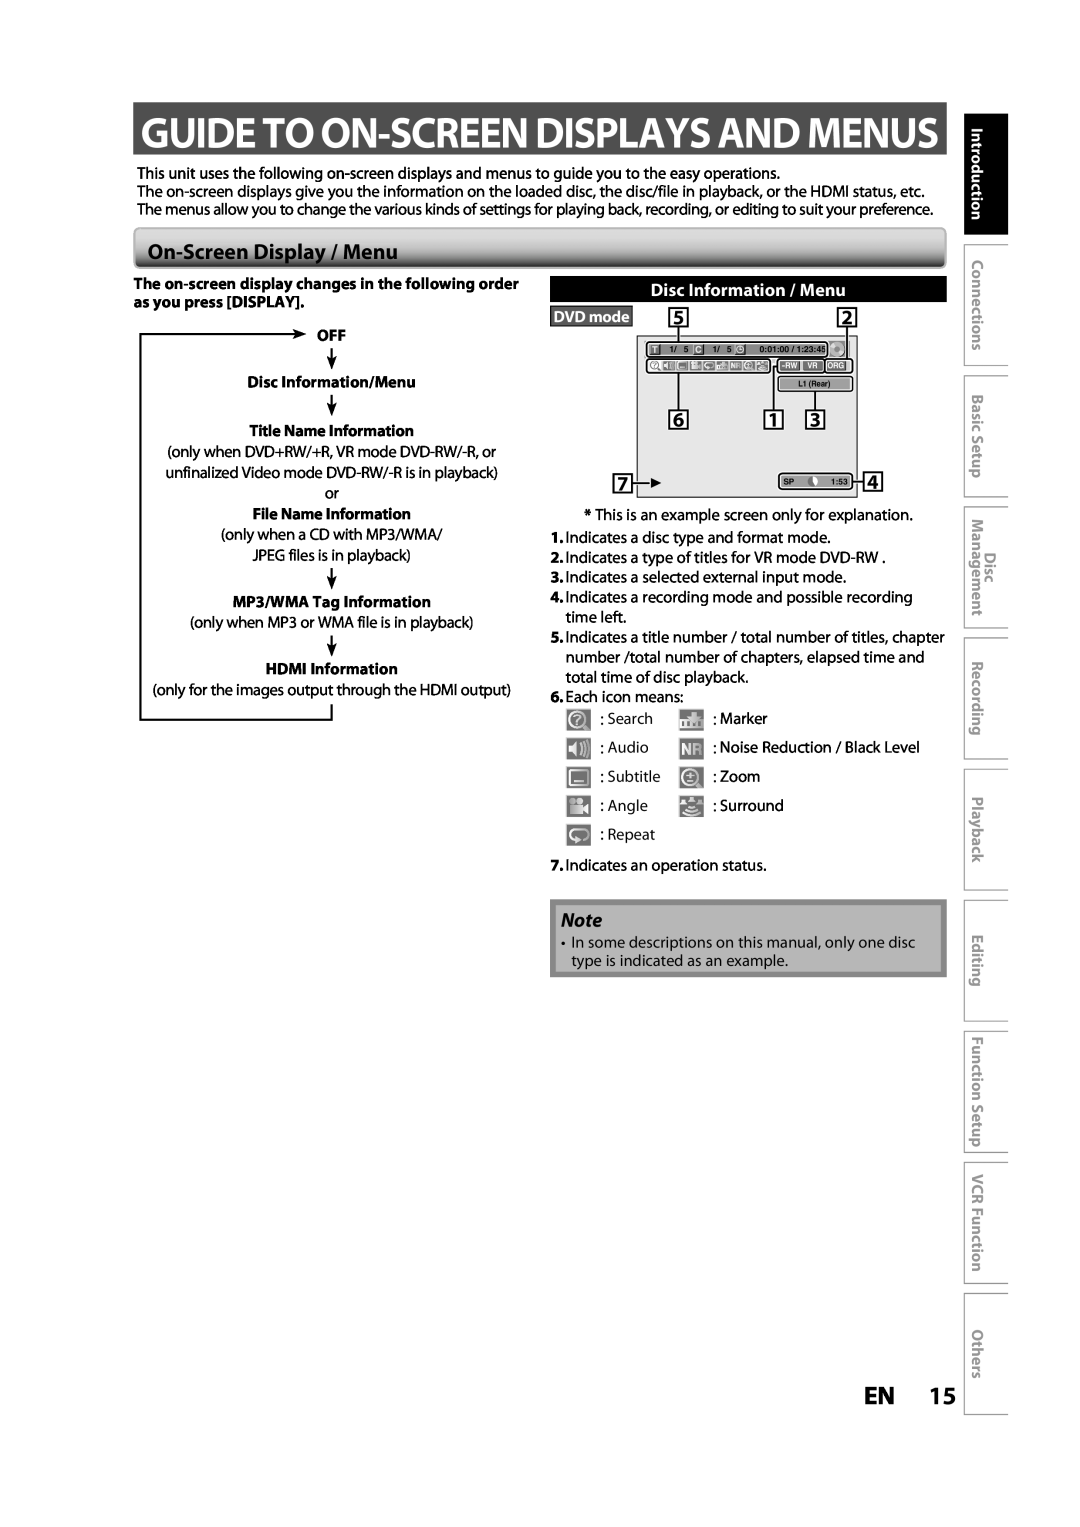 Toshiba DVR620KC owner manual Guide To On-Screen Displays And Menus, On-Screen Display / Menu, Disc Information / Menu 